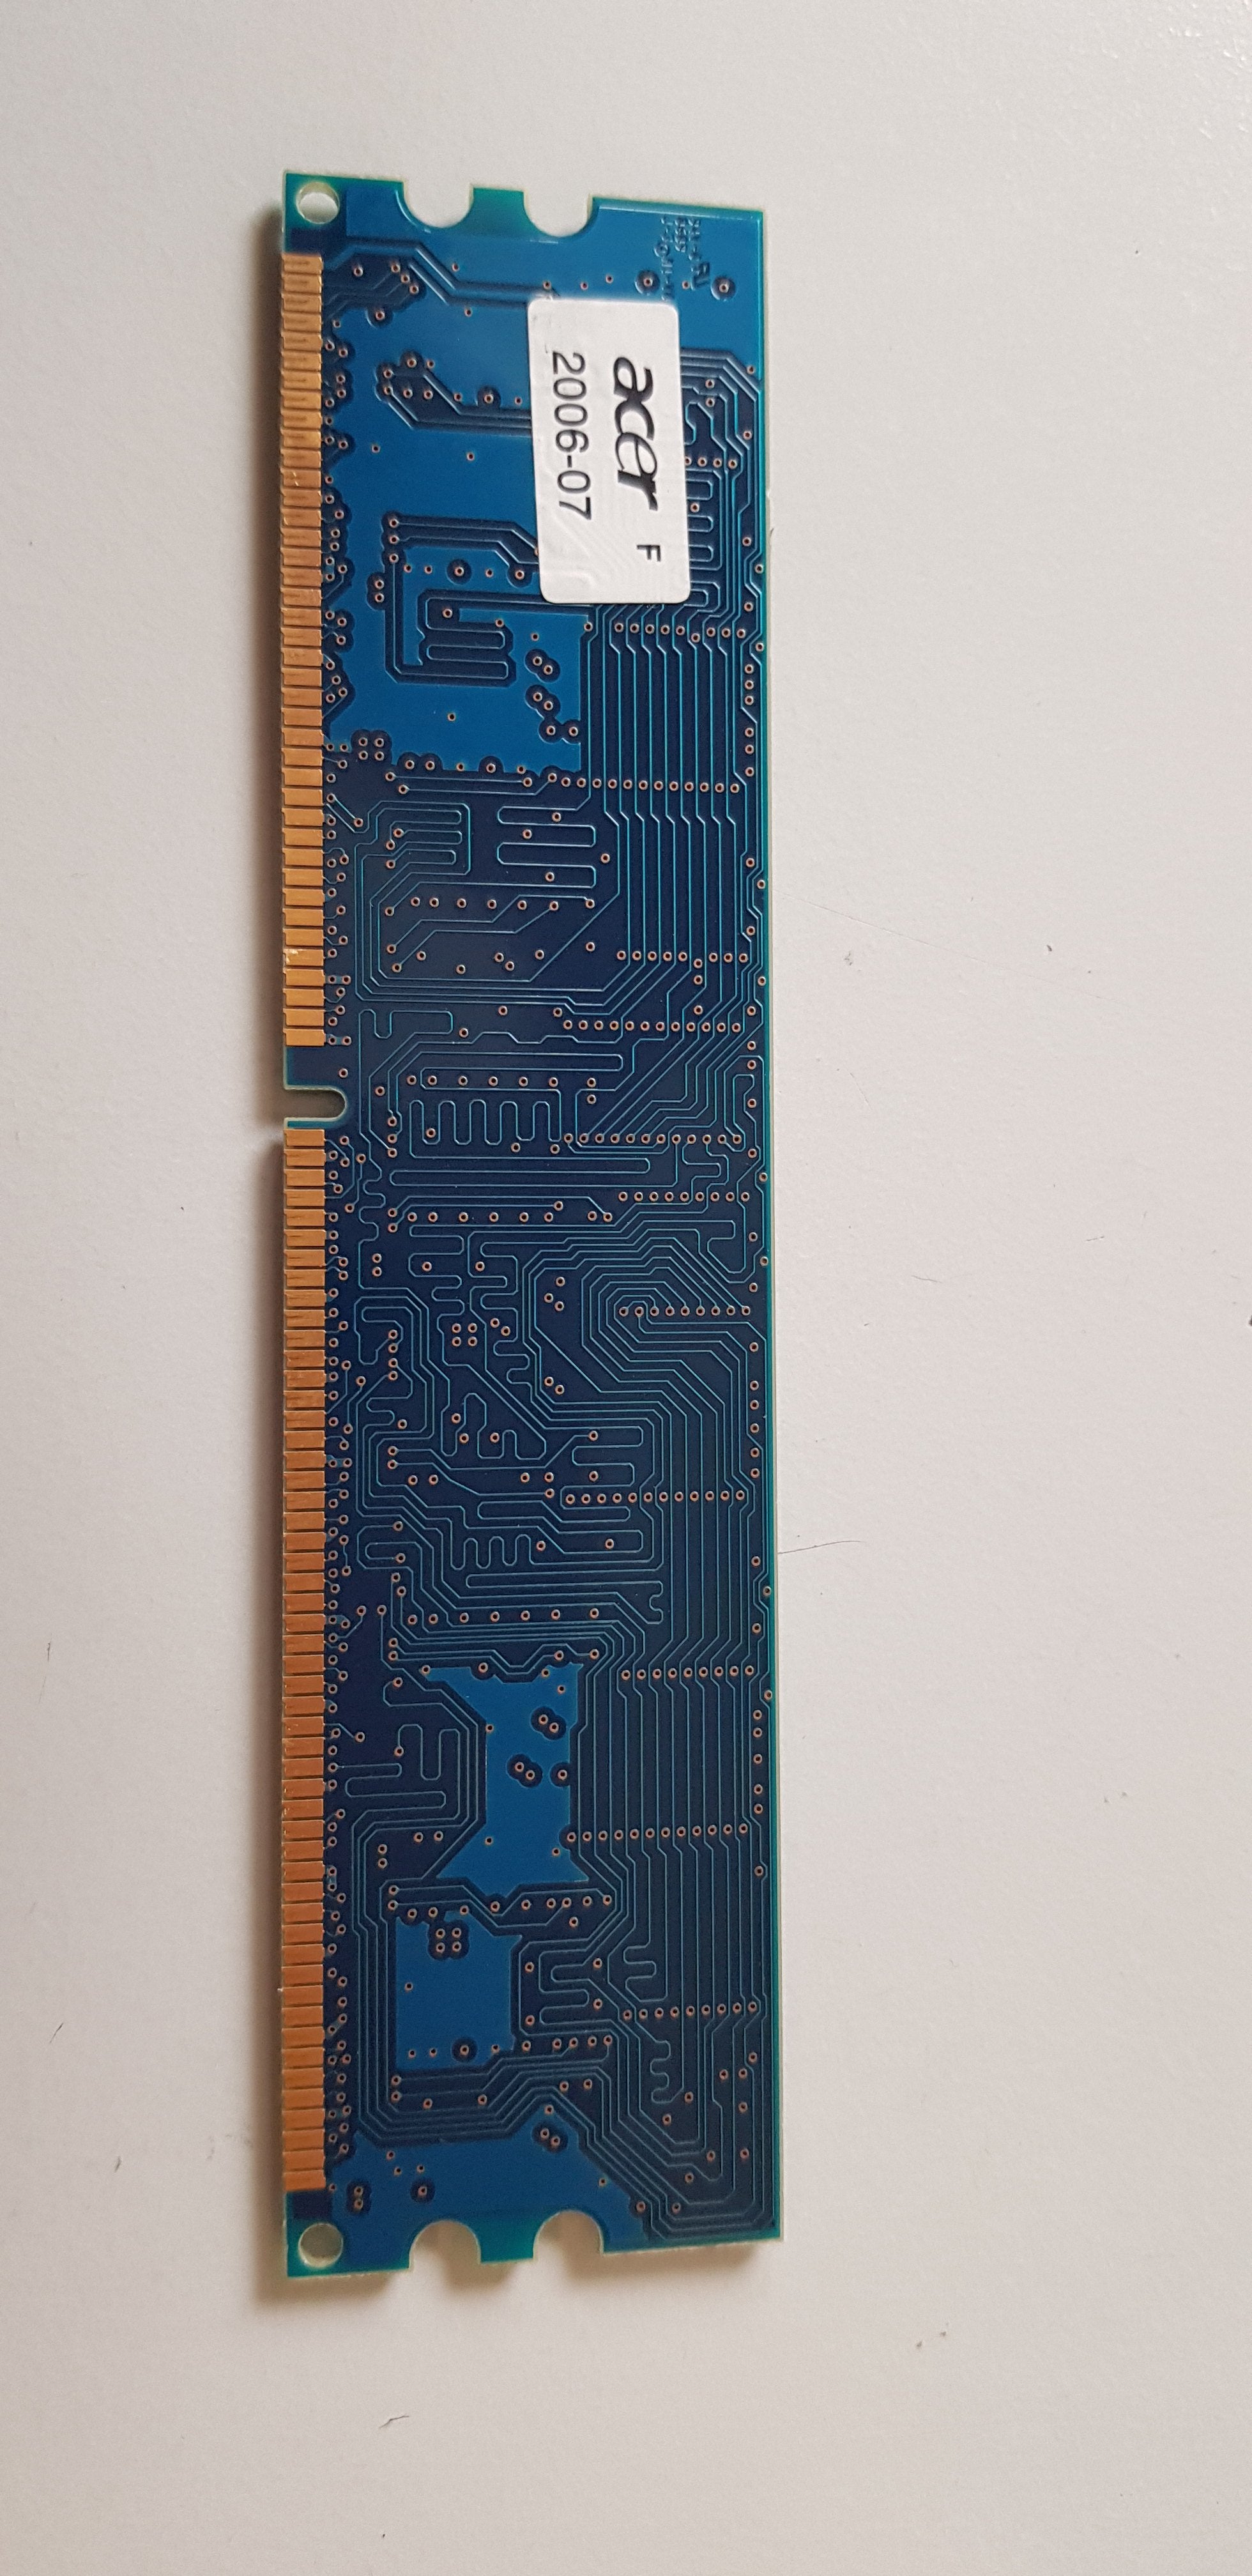 Nanya 256MB PC3200 DDR-400MHz non-ECC Unbuffered CL3 184-Pin DIMM Memory Module (NT256D64SH4B0GY-5T)